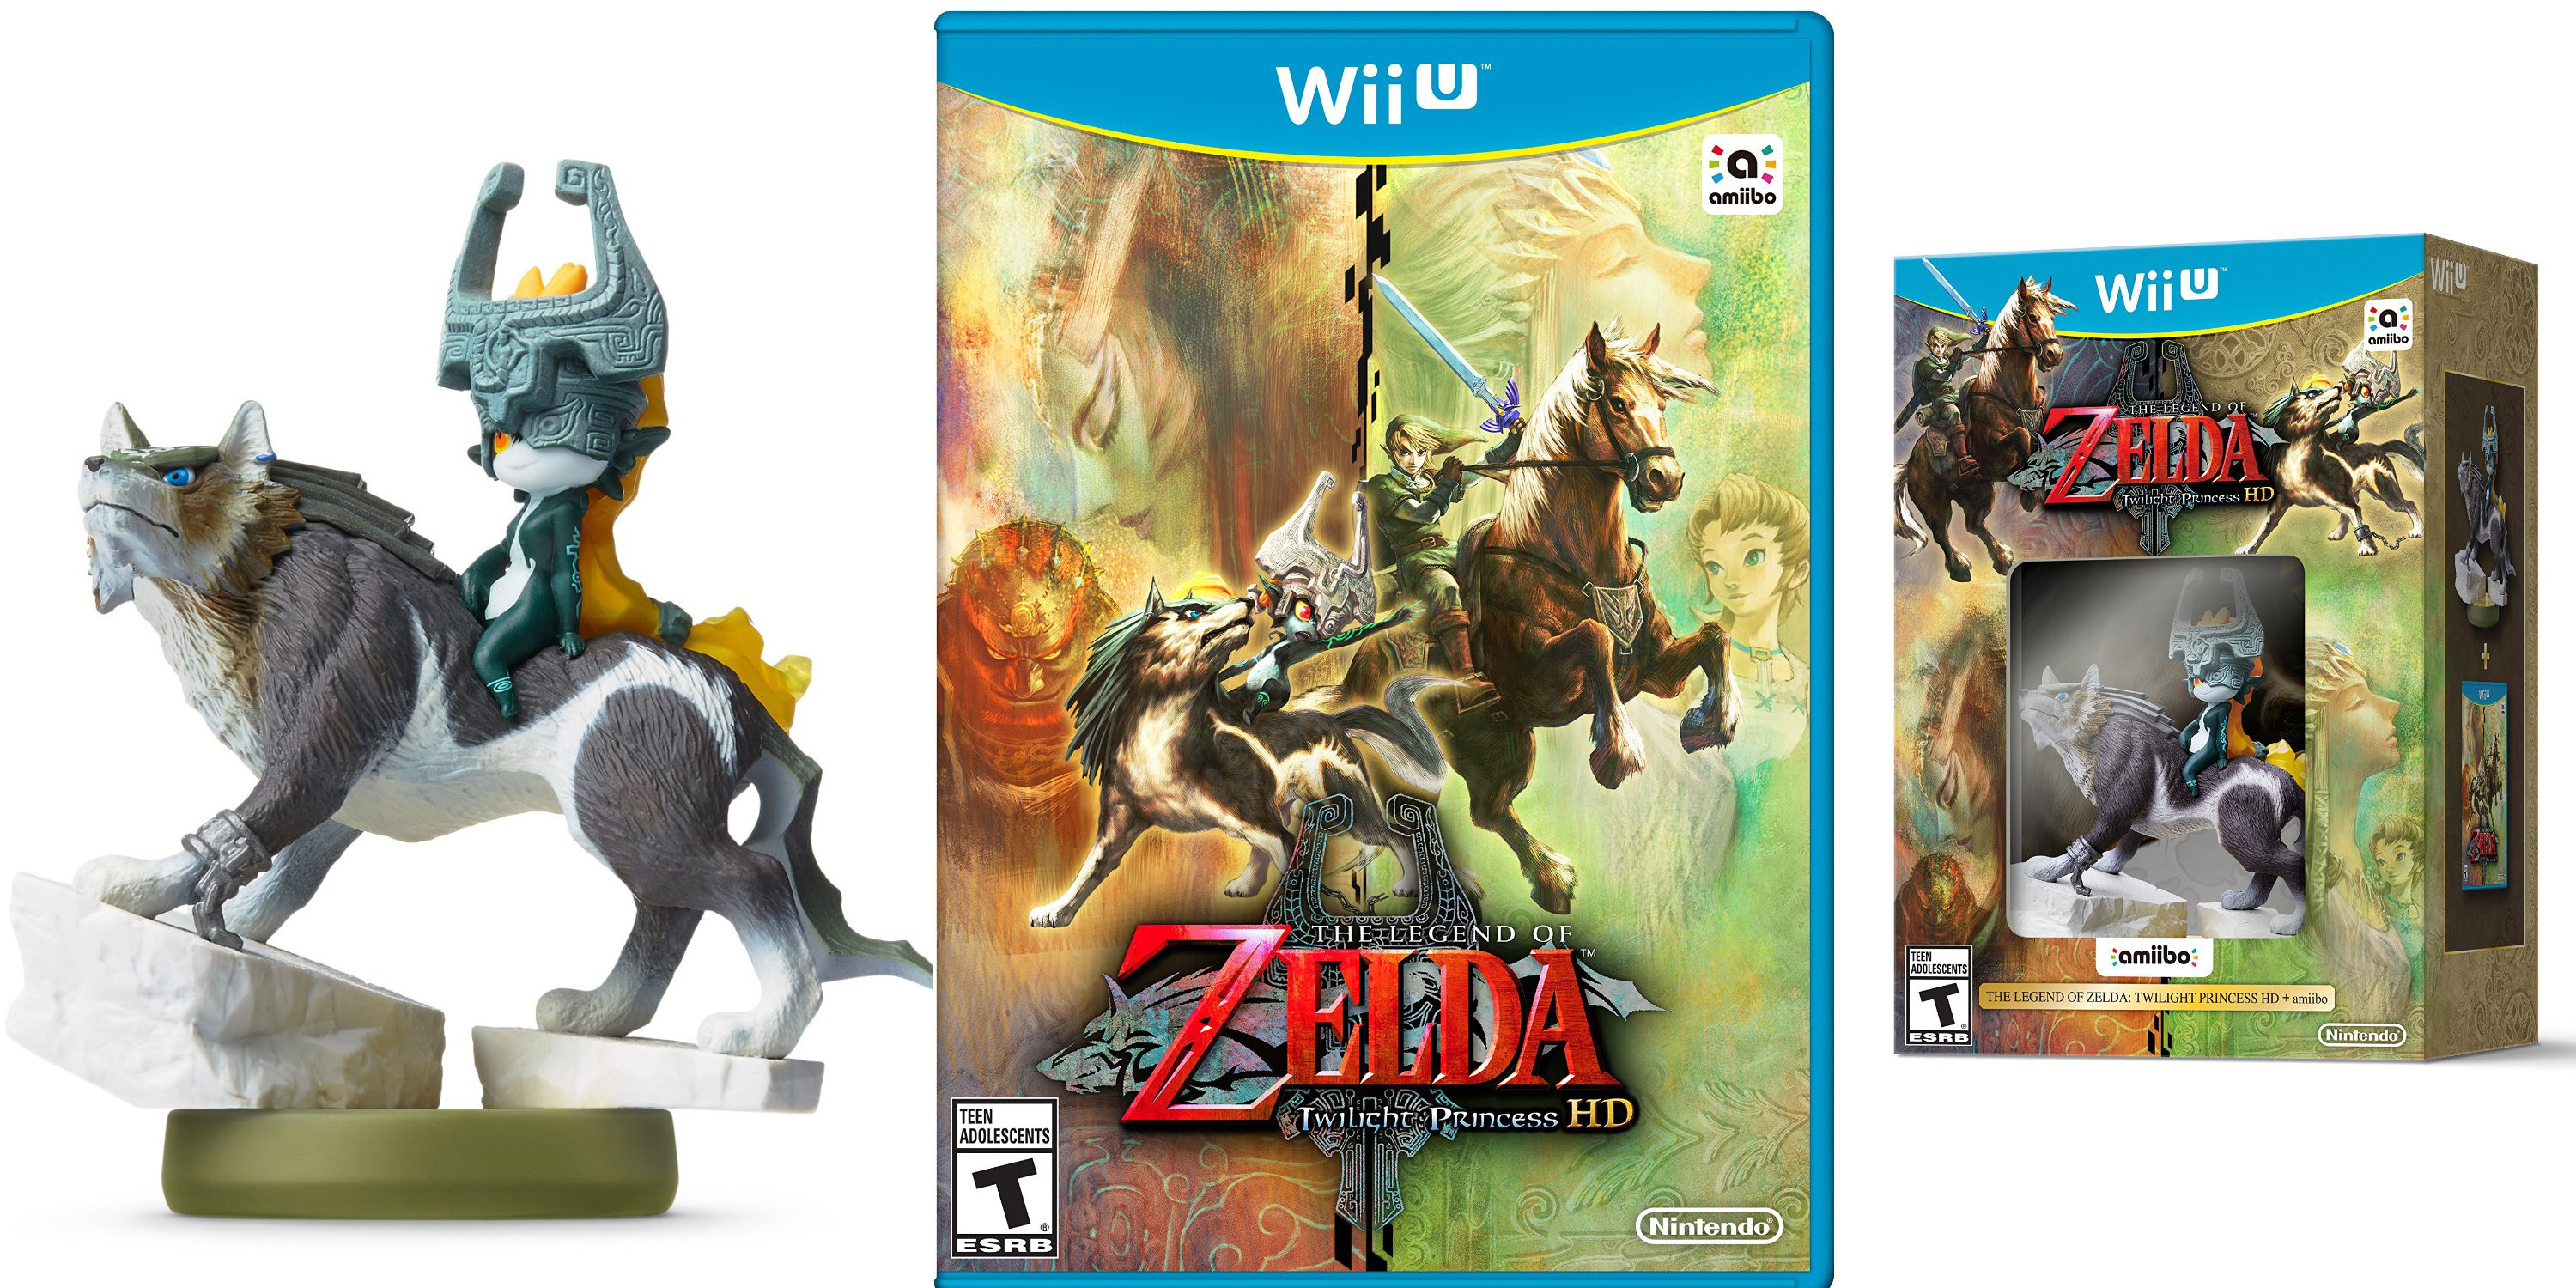 Turbina No hagas vencimiento Nintendo announces Zelda Twilight Princess HD remaster + Wolf Link/Midna &  Gold Mega Man amiibo, more